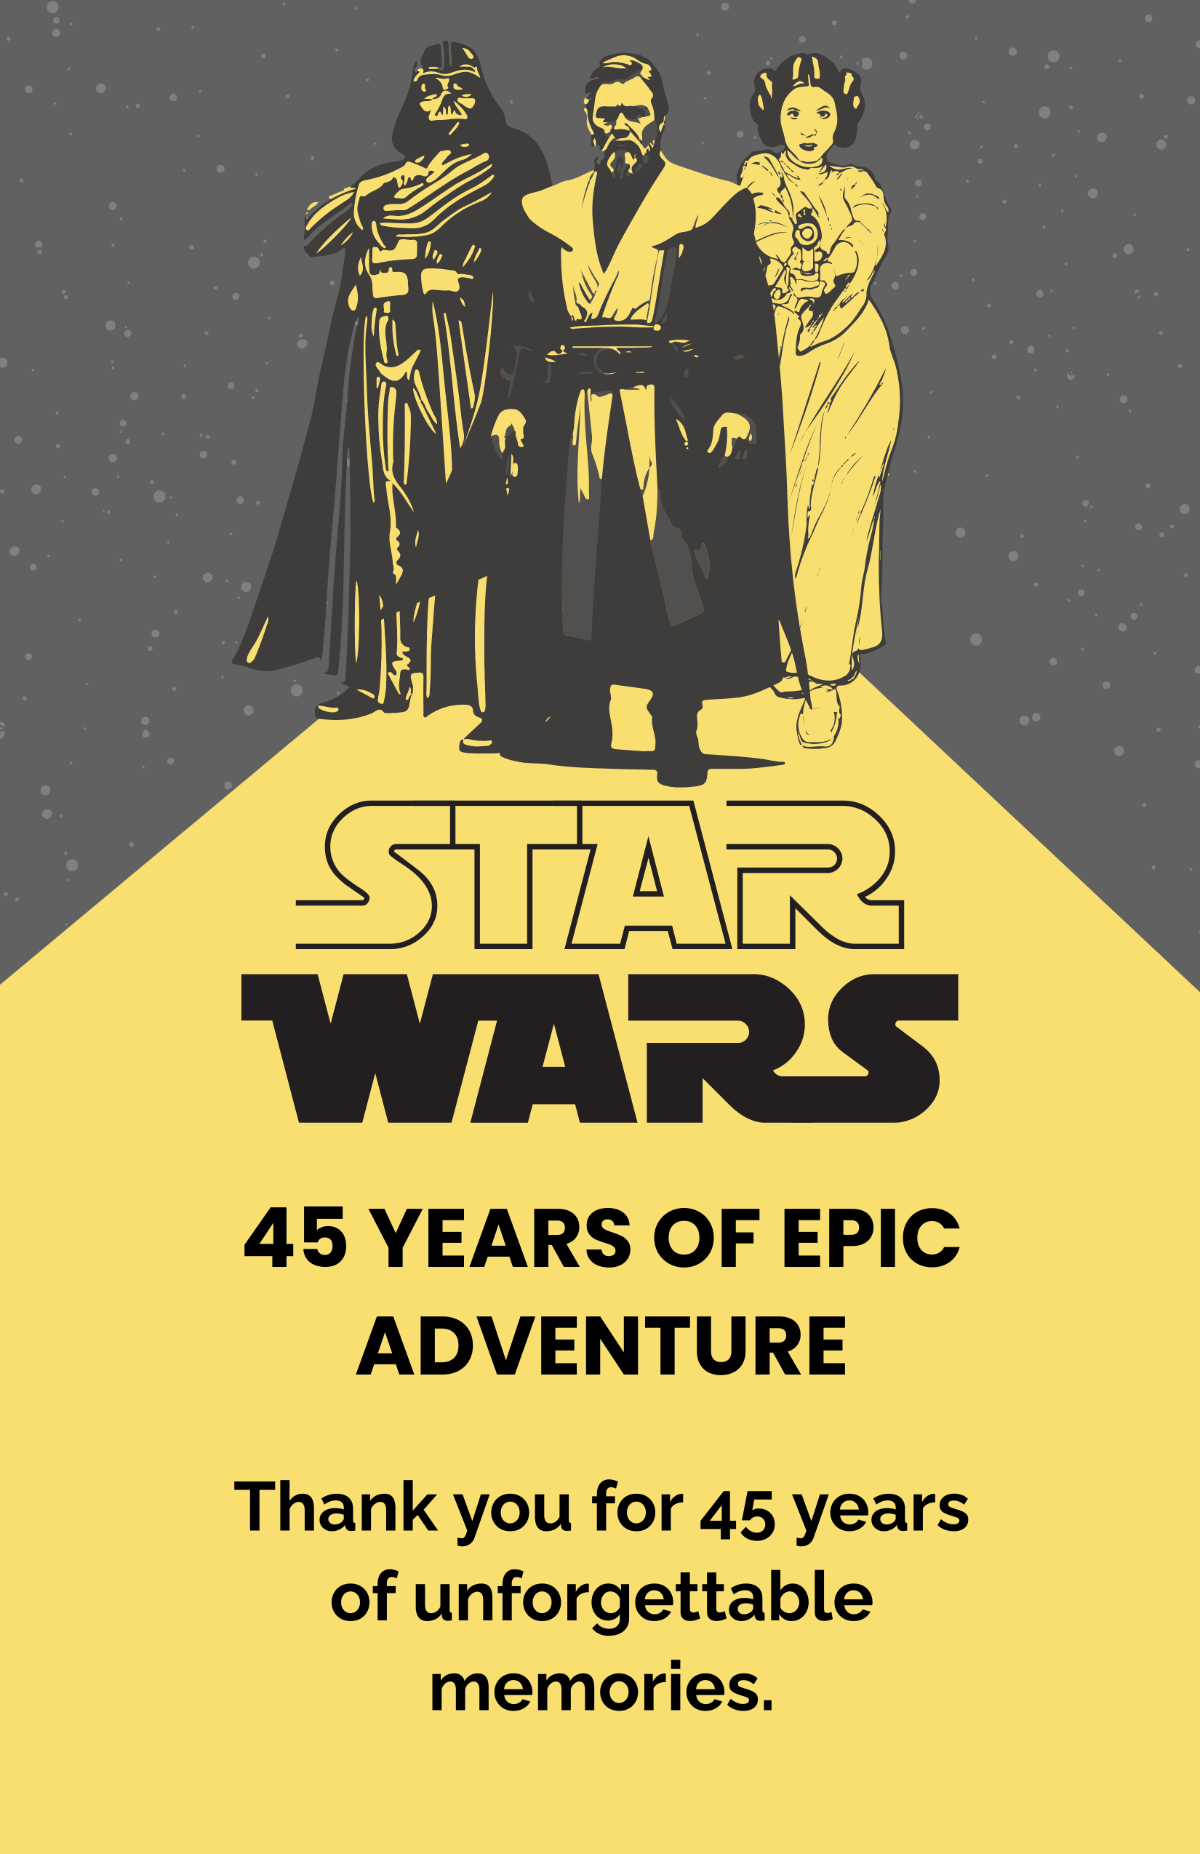 Star Wars Anniversary Poster